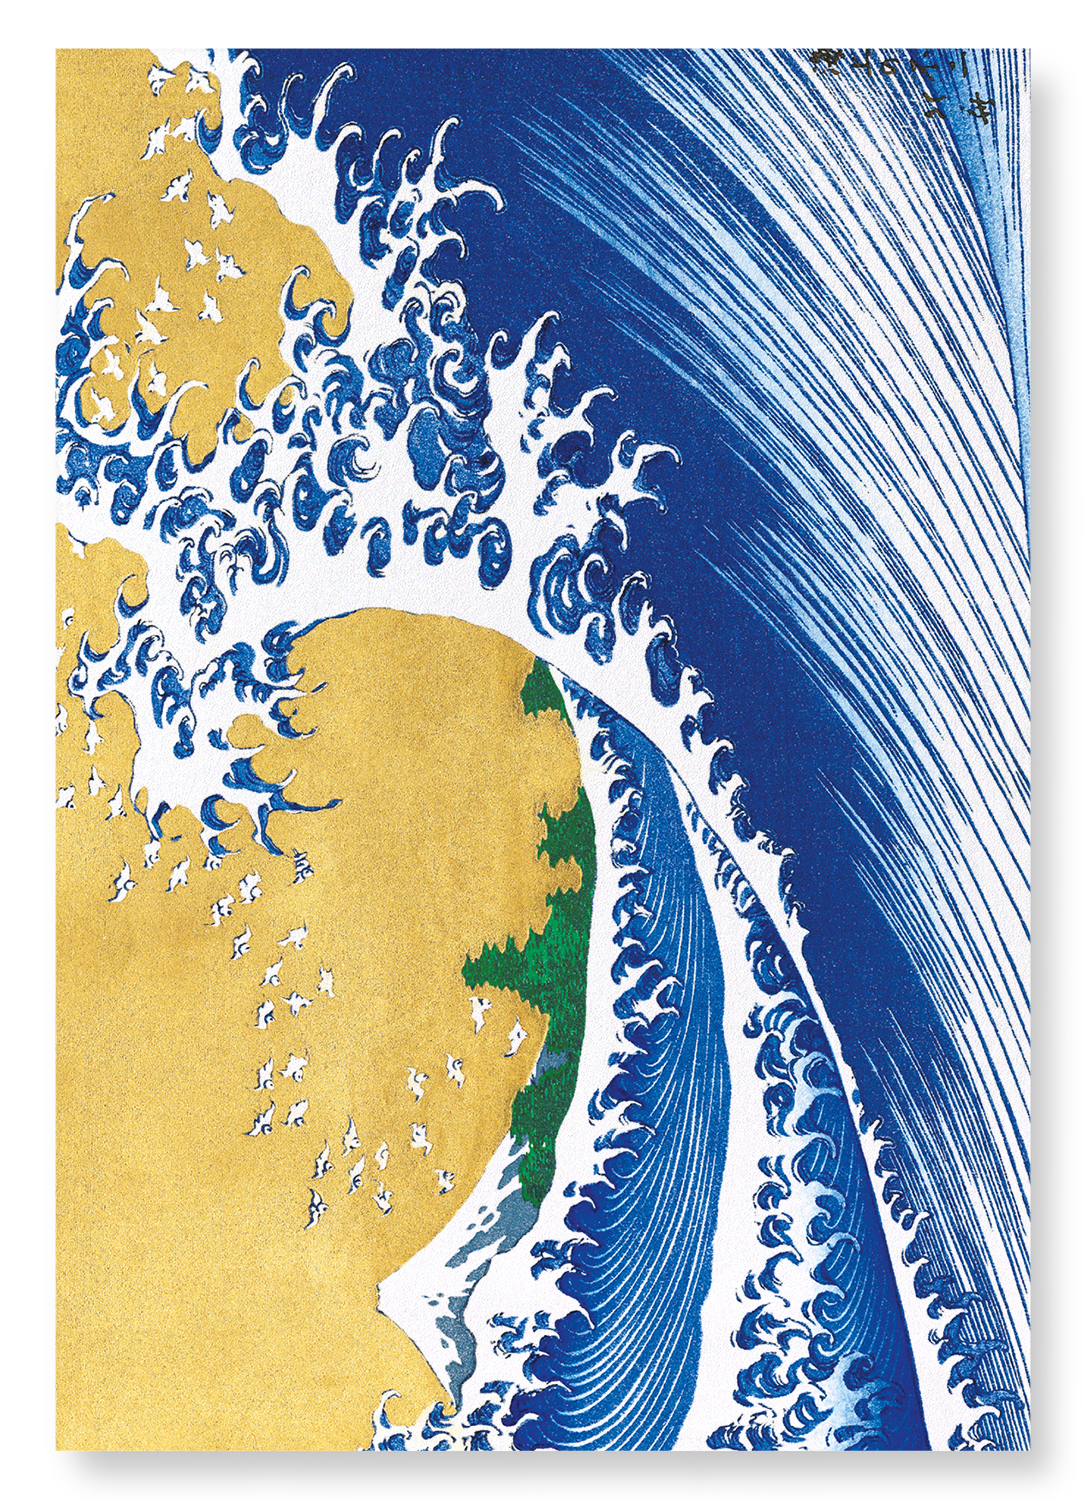 FUJI FROM THE SEA: Japanese Art Print